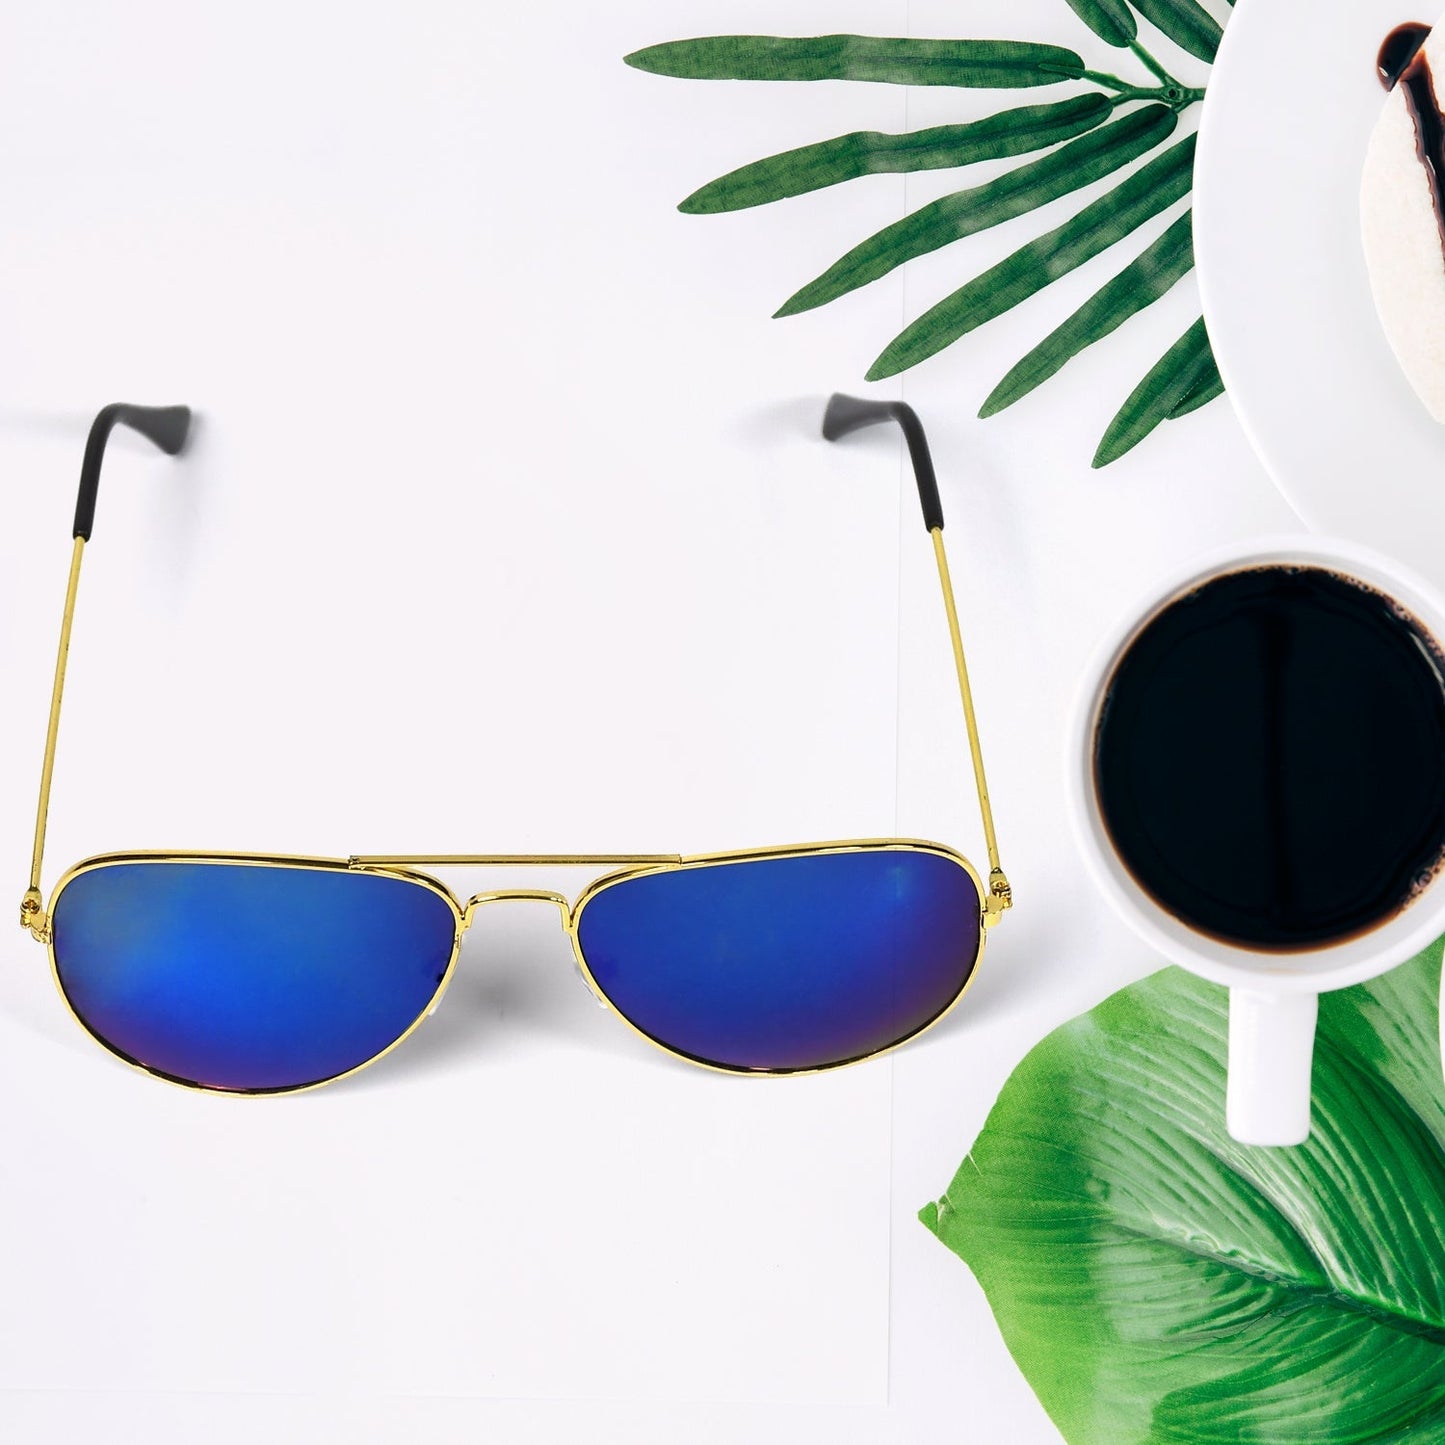 7701 classic Sunglasses for Men & Women, 100% UV Protected, Lightweight DeoDap